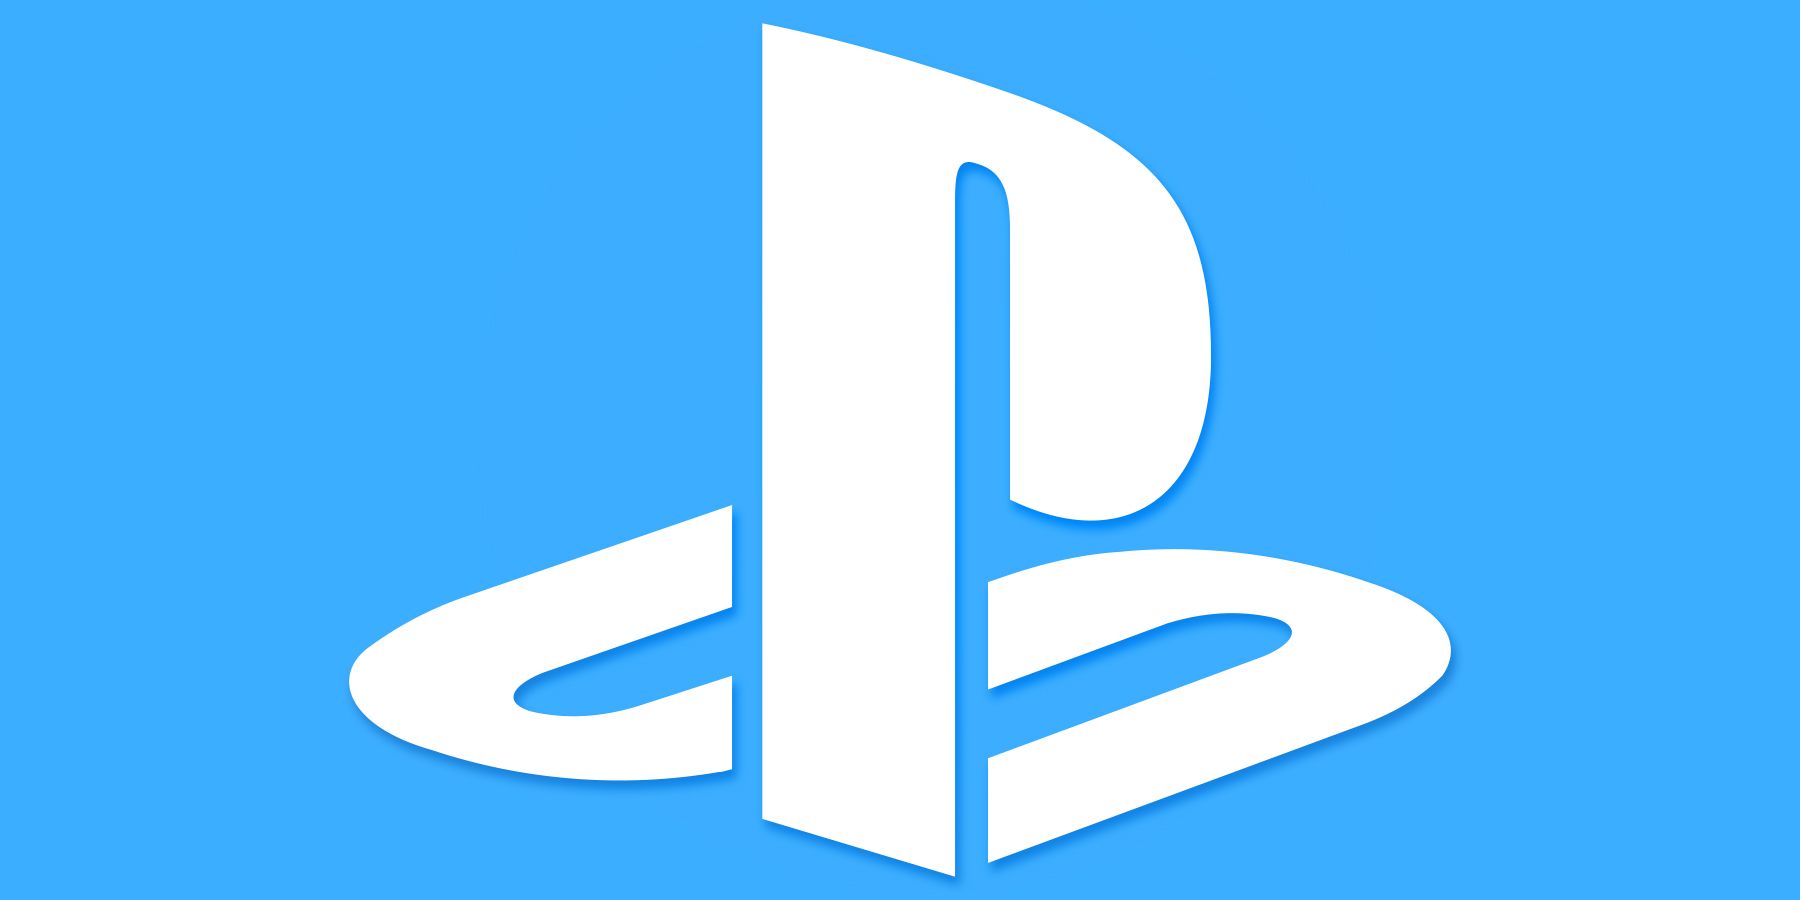 PlayStation logo submark on bright blue background